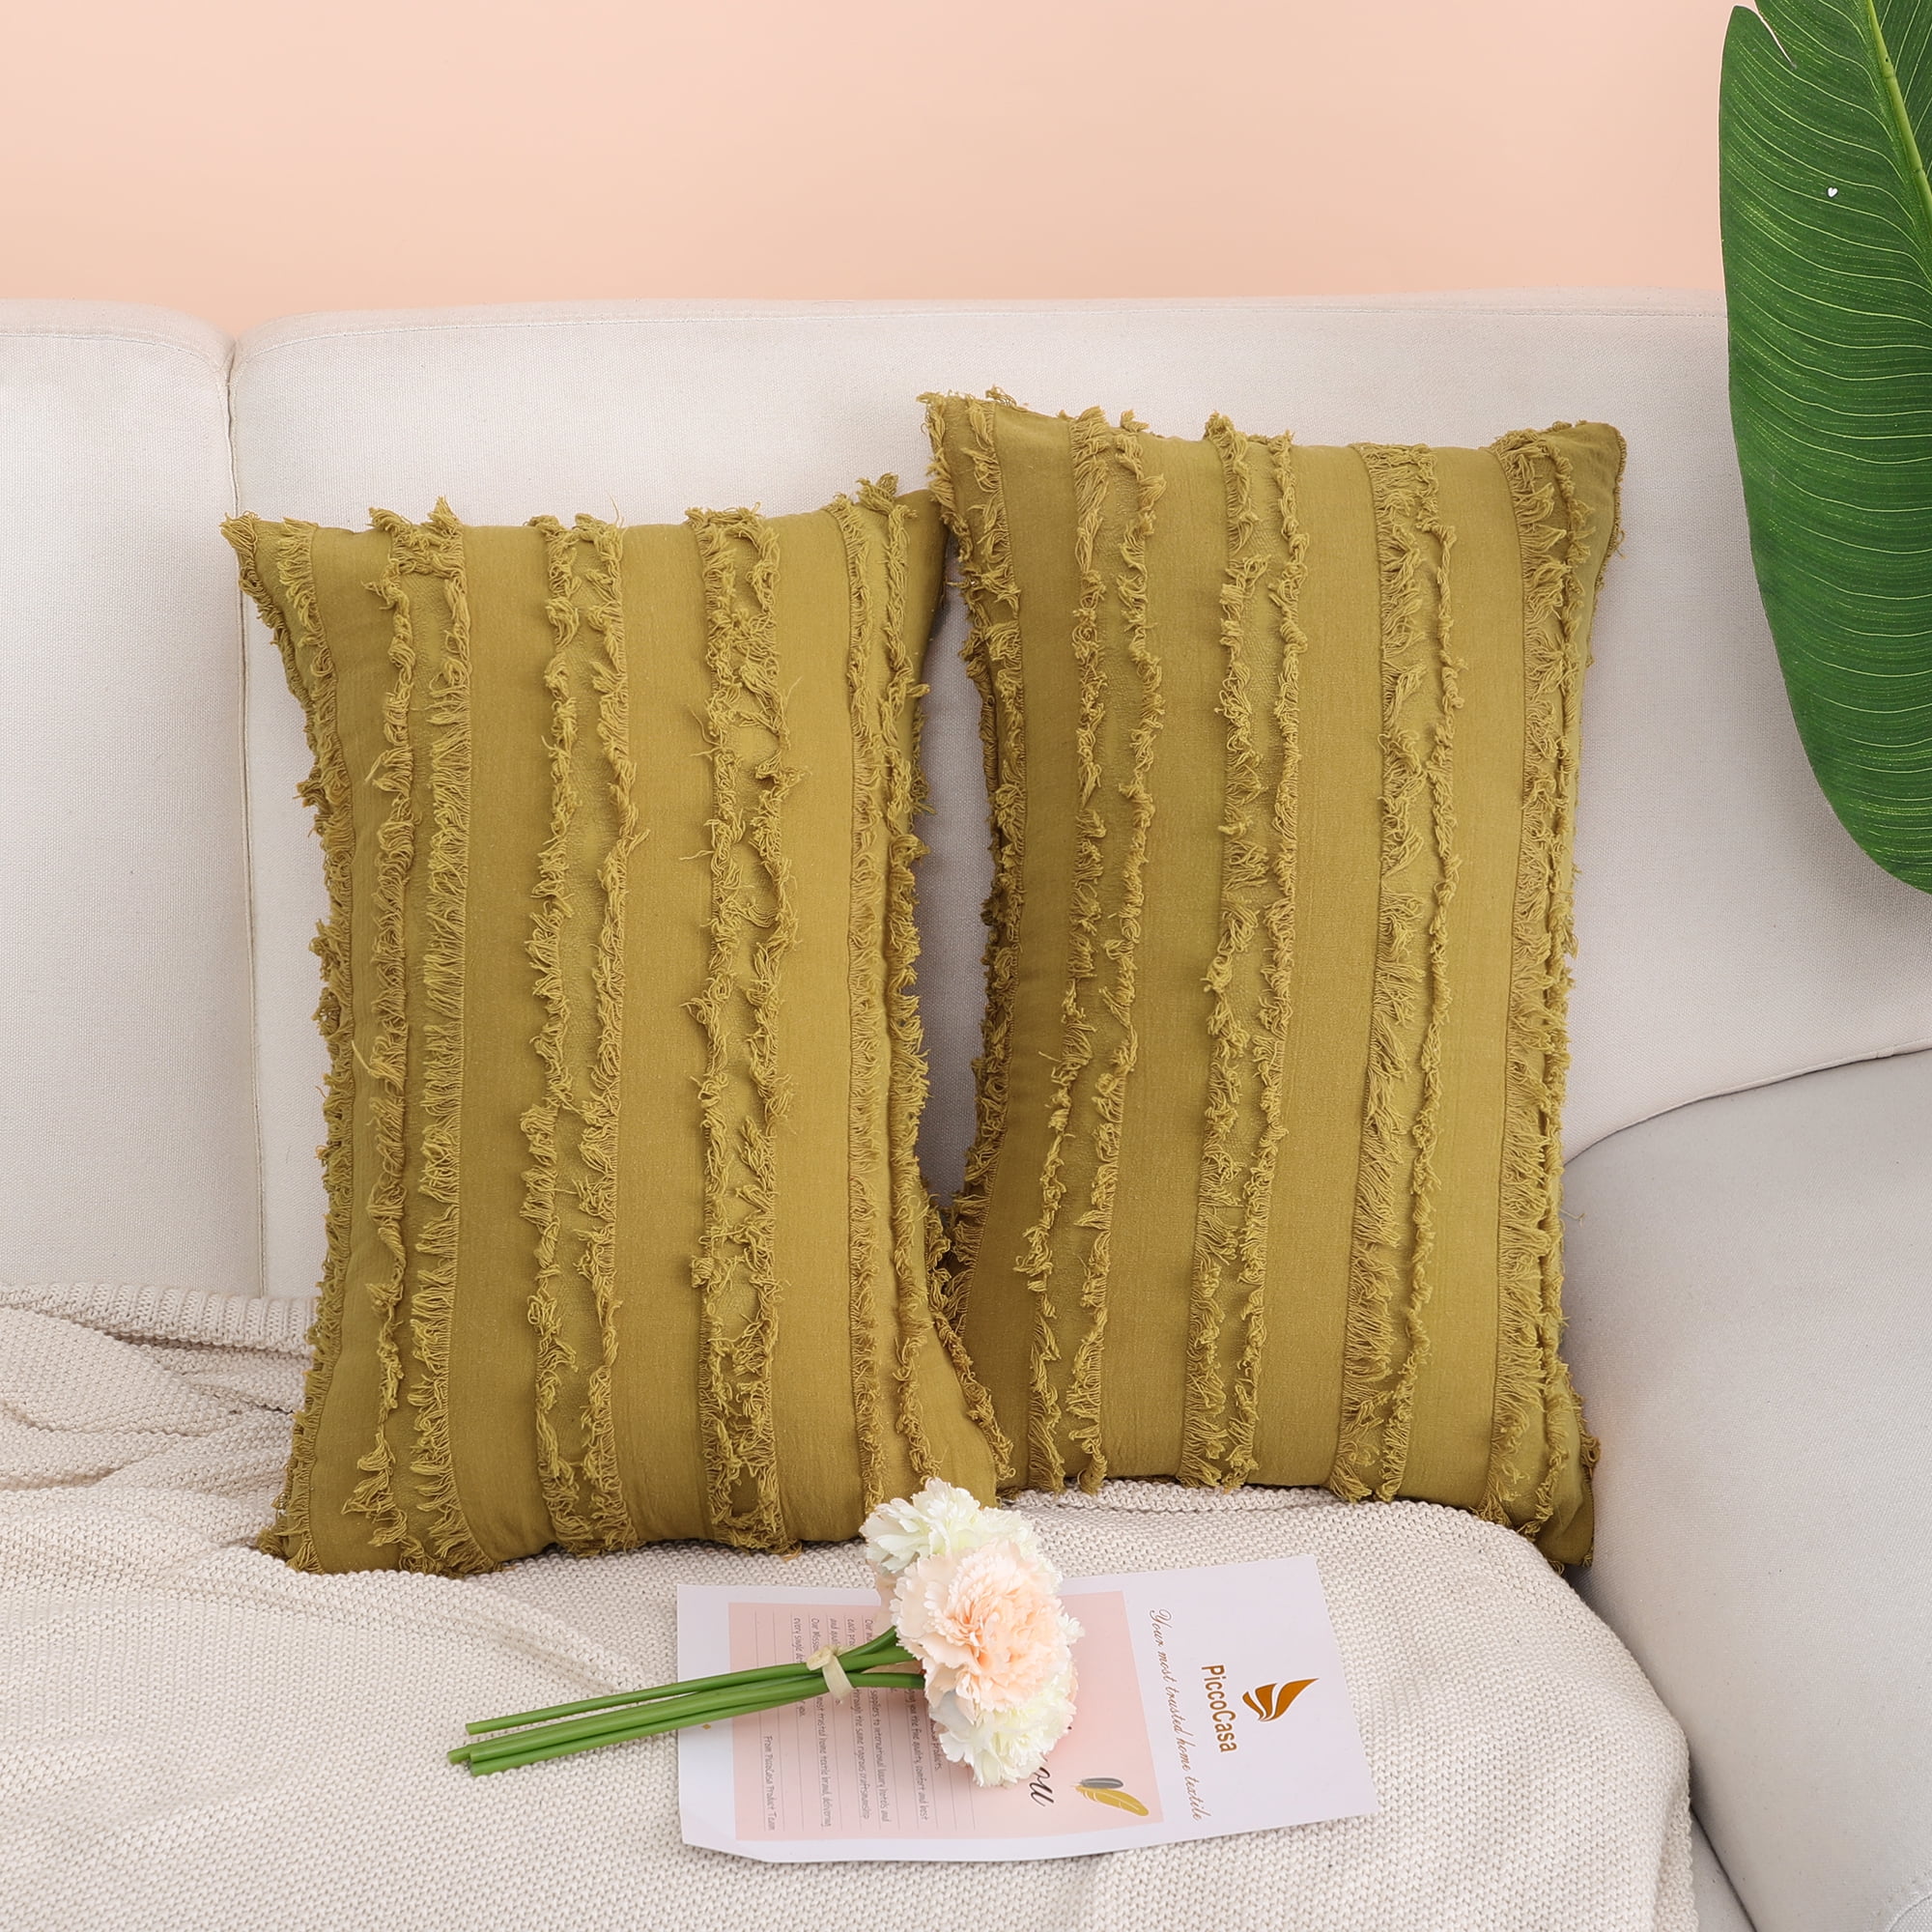 2Pcs Navy Blue Gold Cushion Cover Pillow Shells Damask Floral Sofa Home 45x45cm 